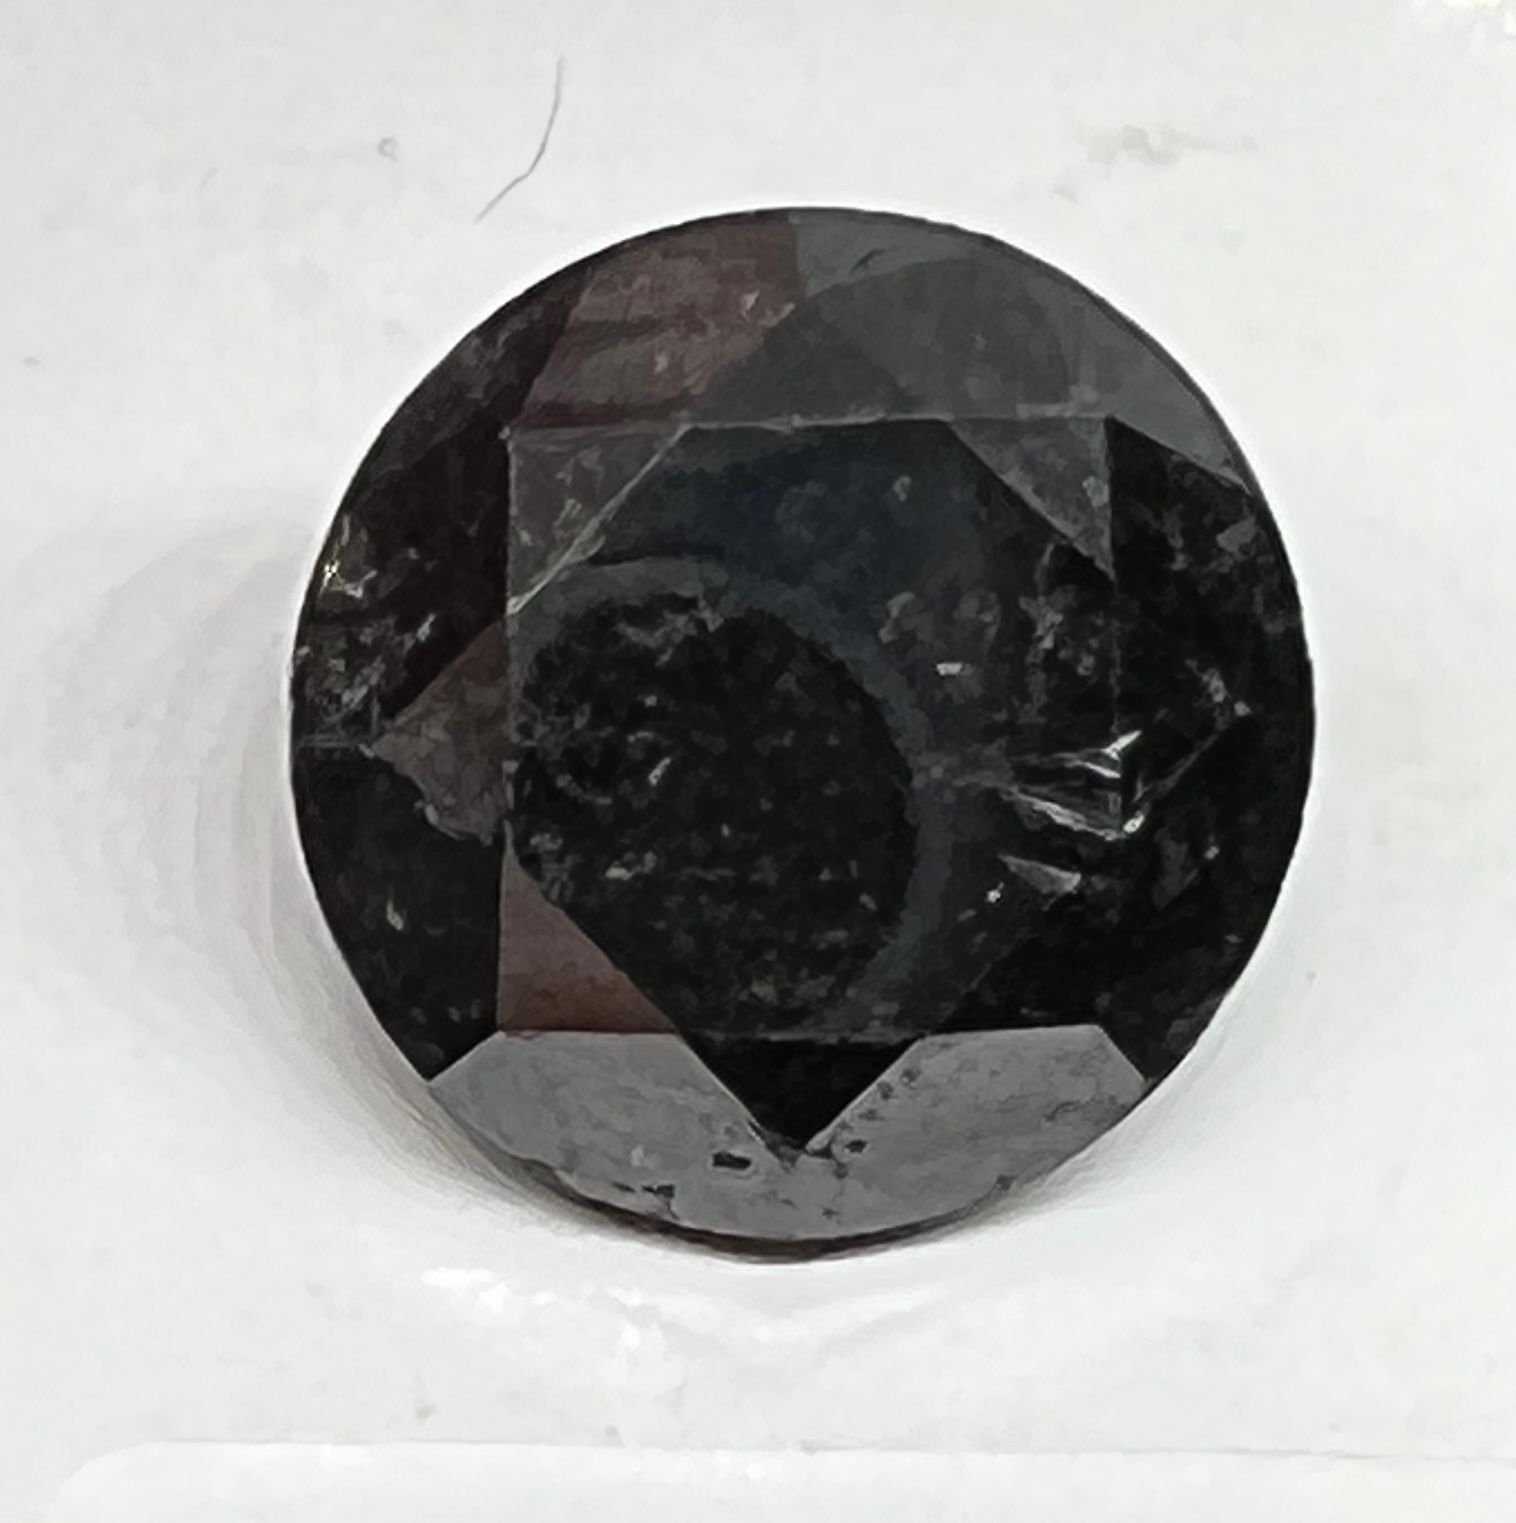 Diamant 12.13 carat BLACK DIAMOND with AIGT certificate of guarantee